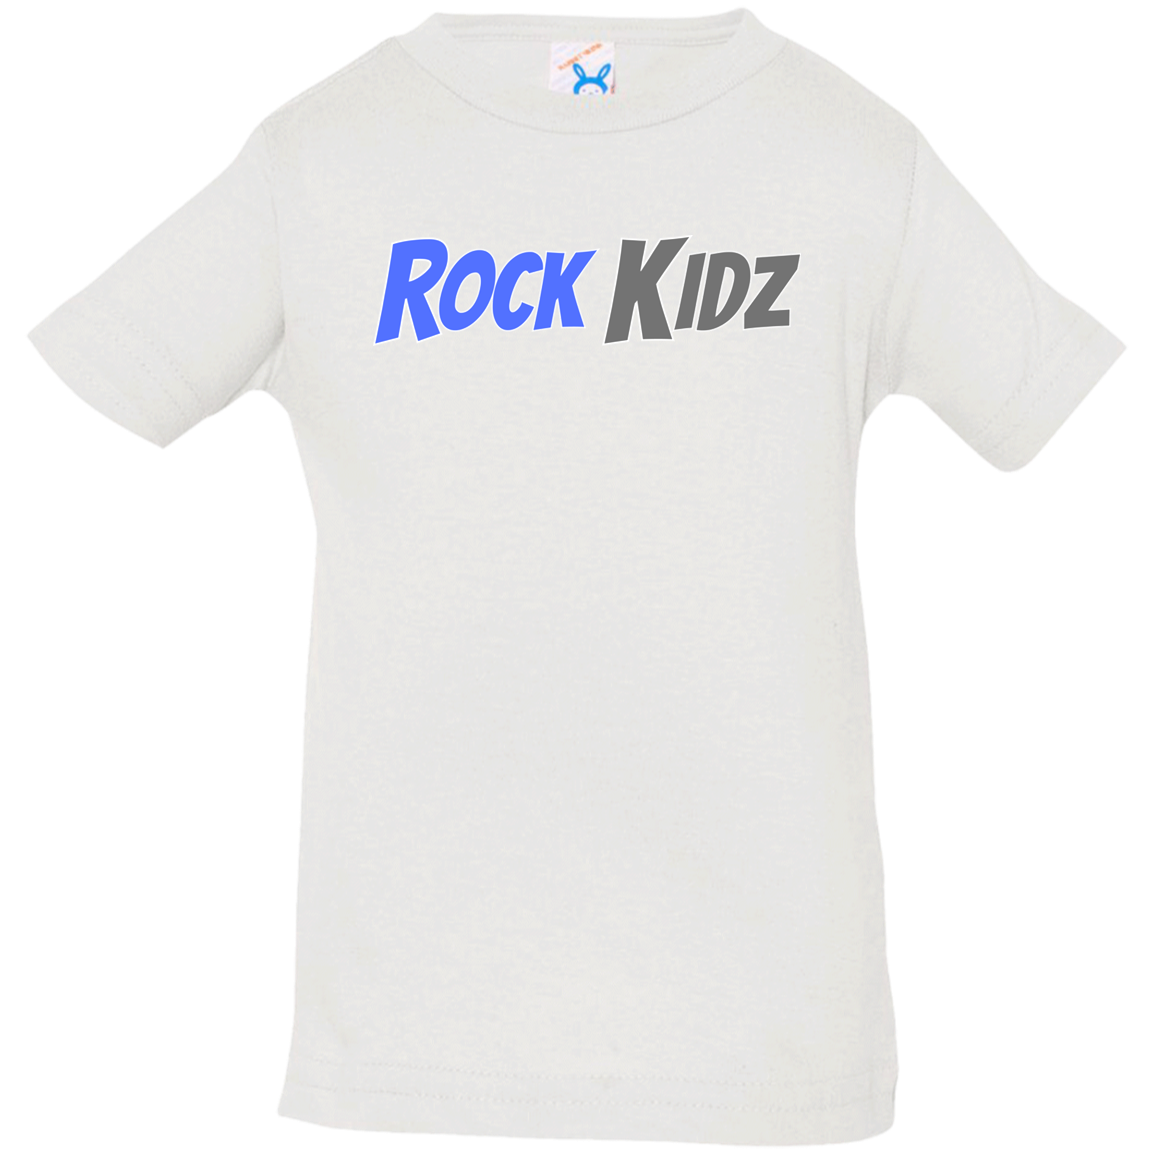 ROCK KIDZ Youth and Toddler Tees